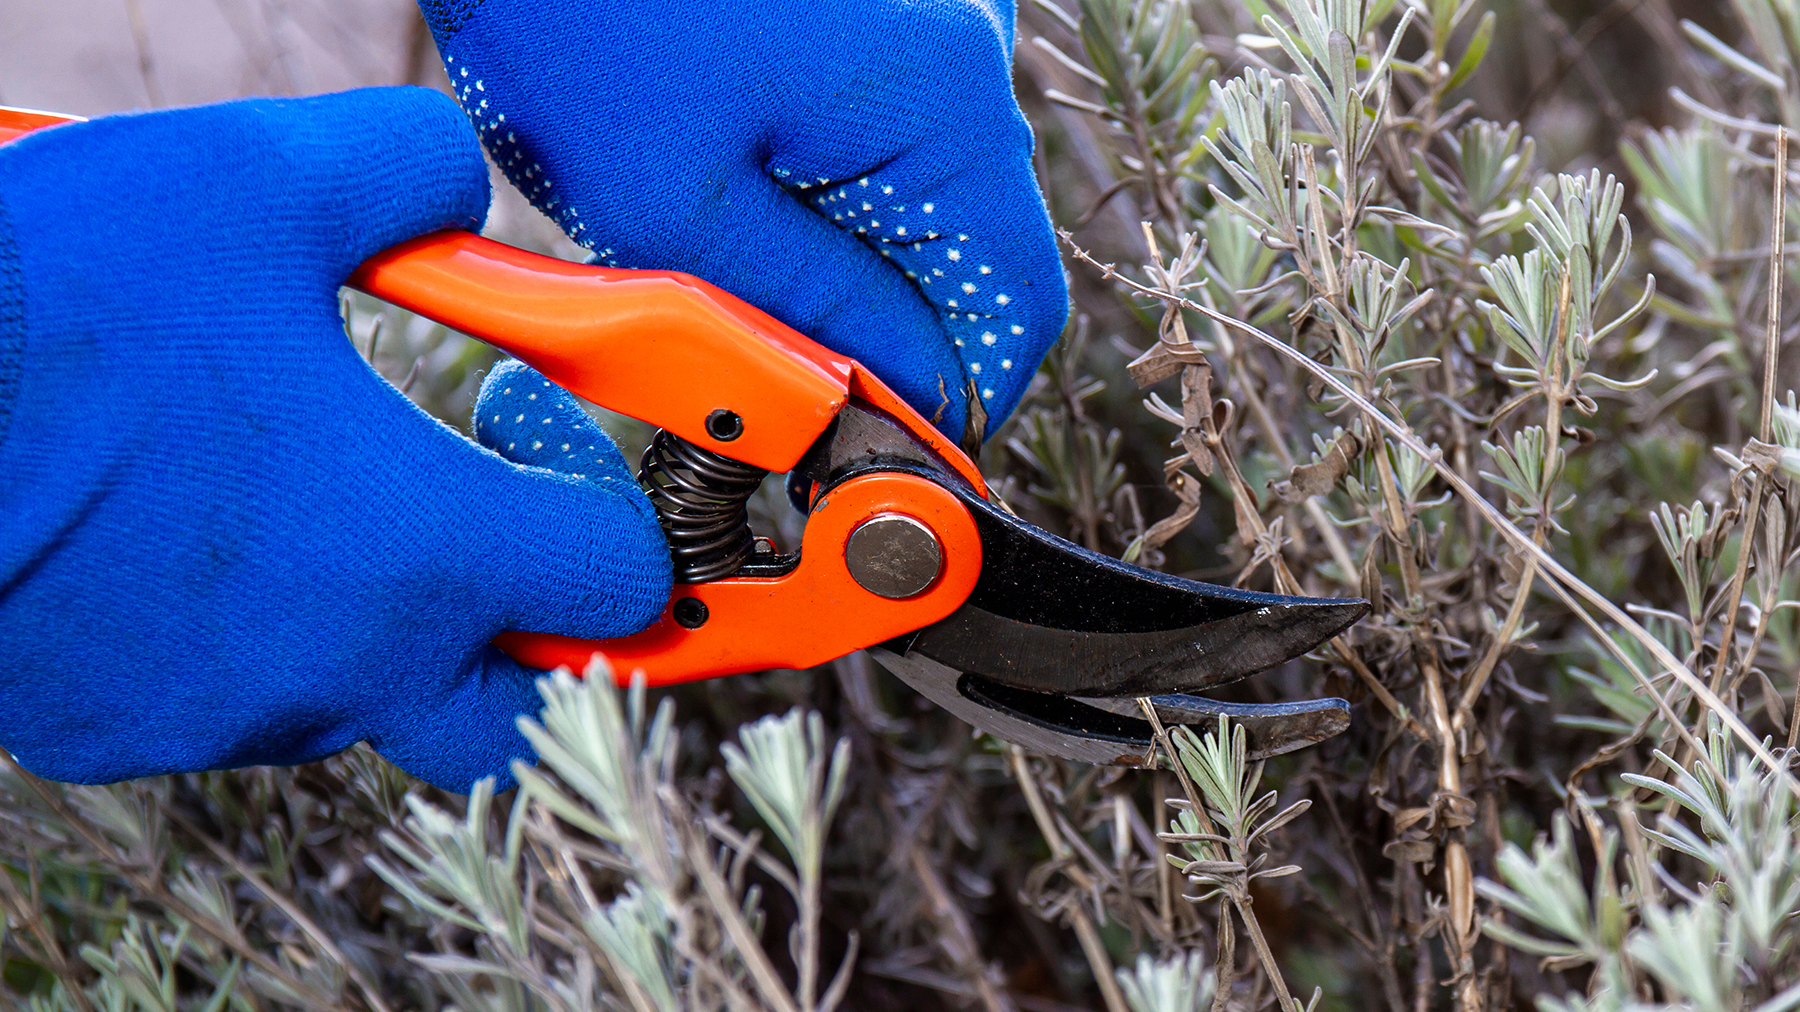 Person wearing blue gardening gloves pruning lavender with orange secateurs